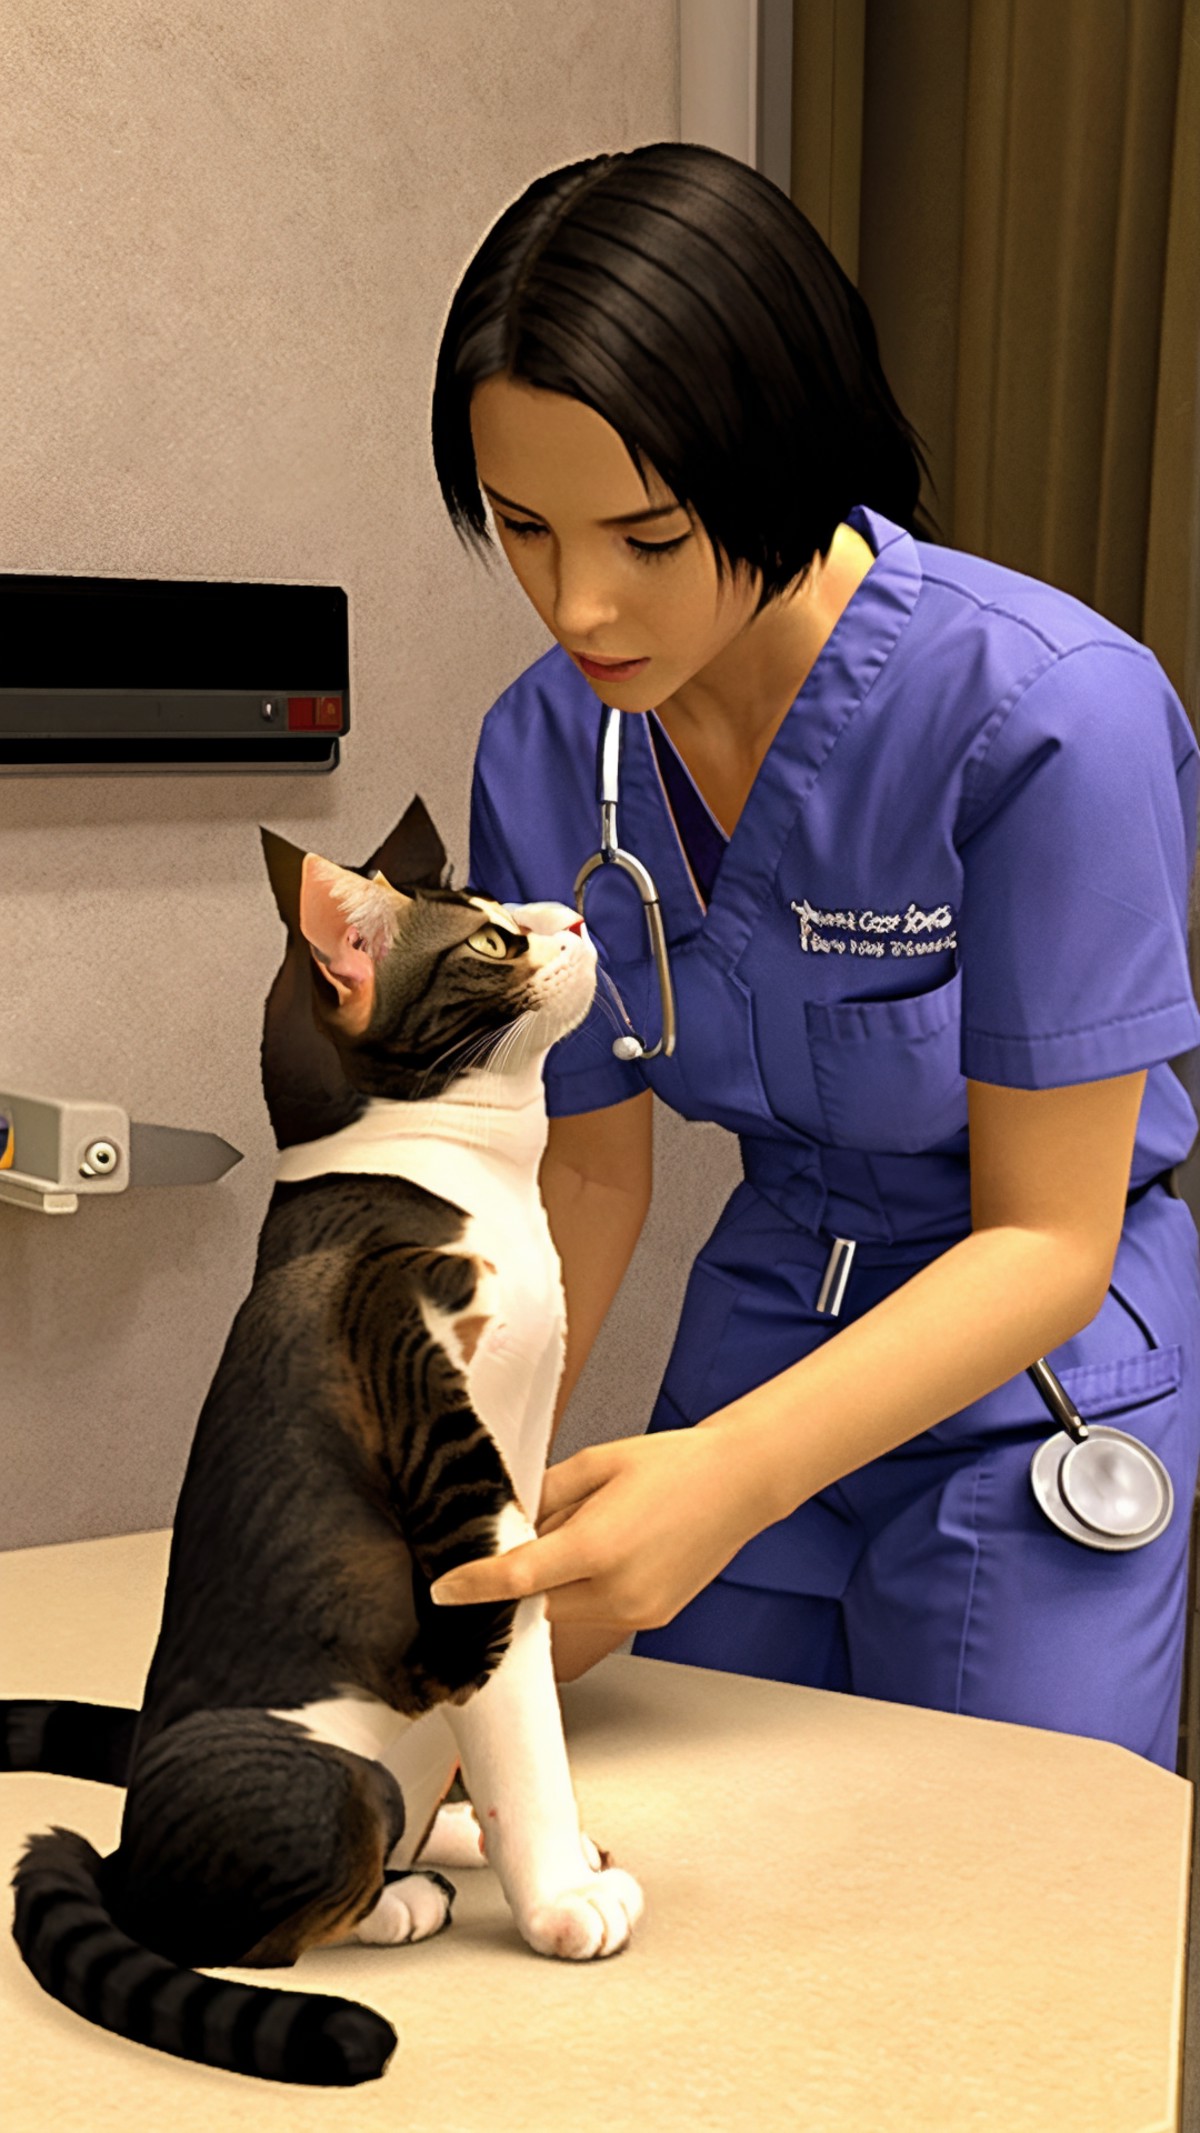 PS2 Filter AI veterinarian